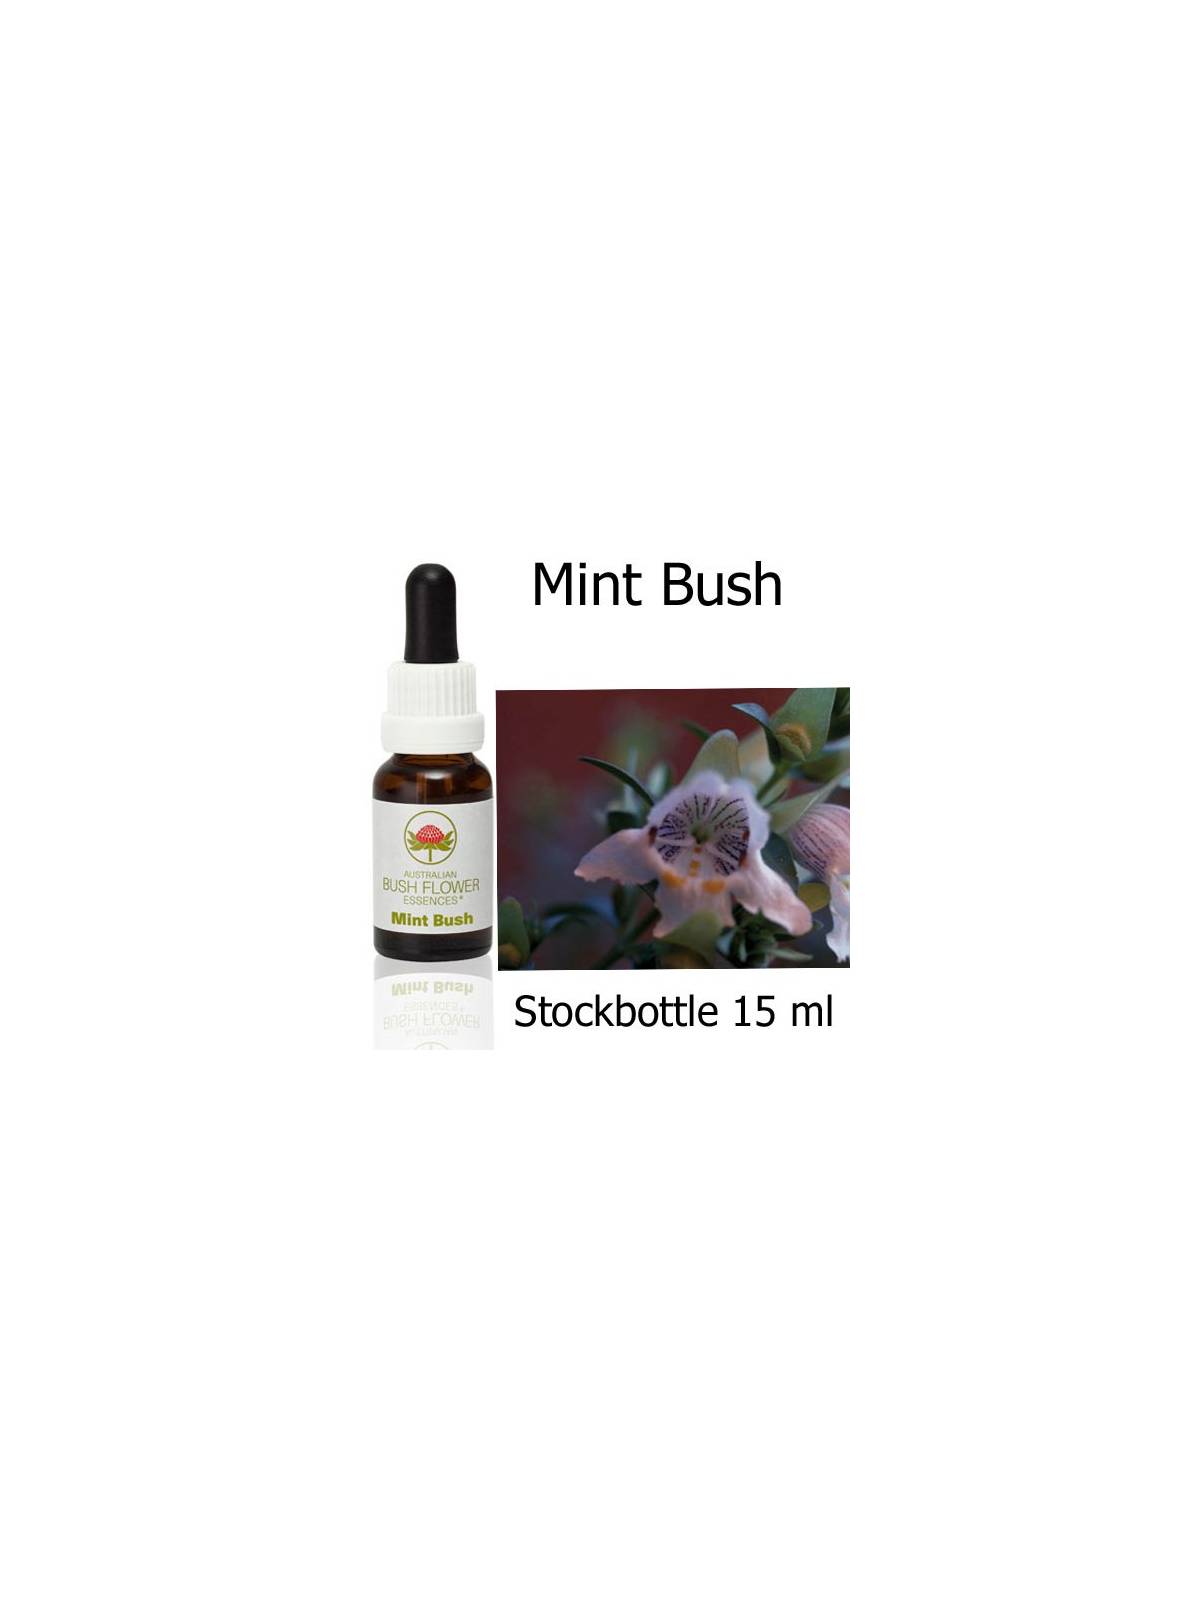 Australische Buschblüten Stockbottles Mint Bush Australian Bush Flower Essences